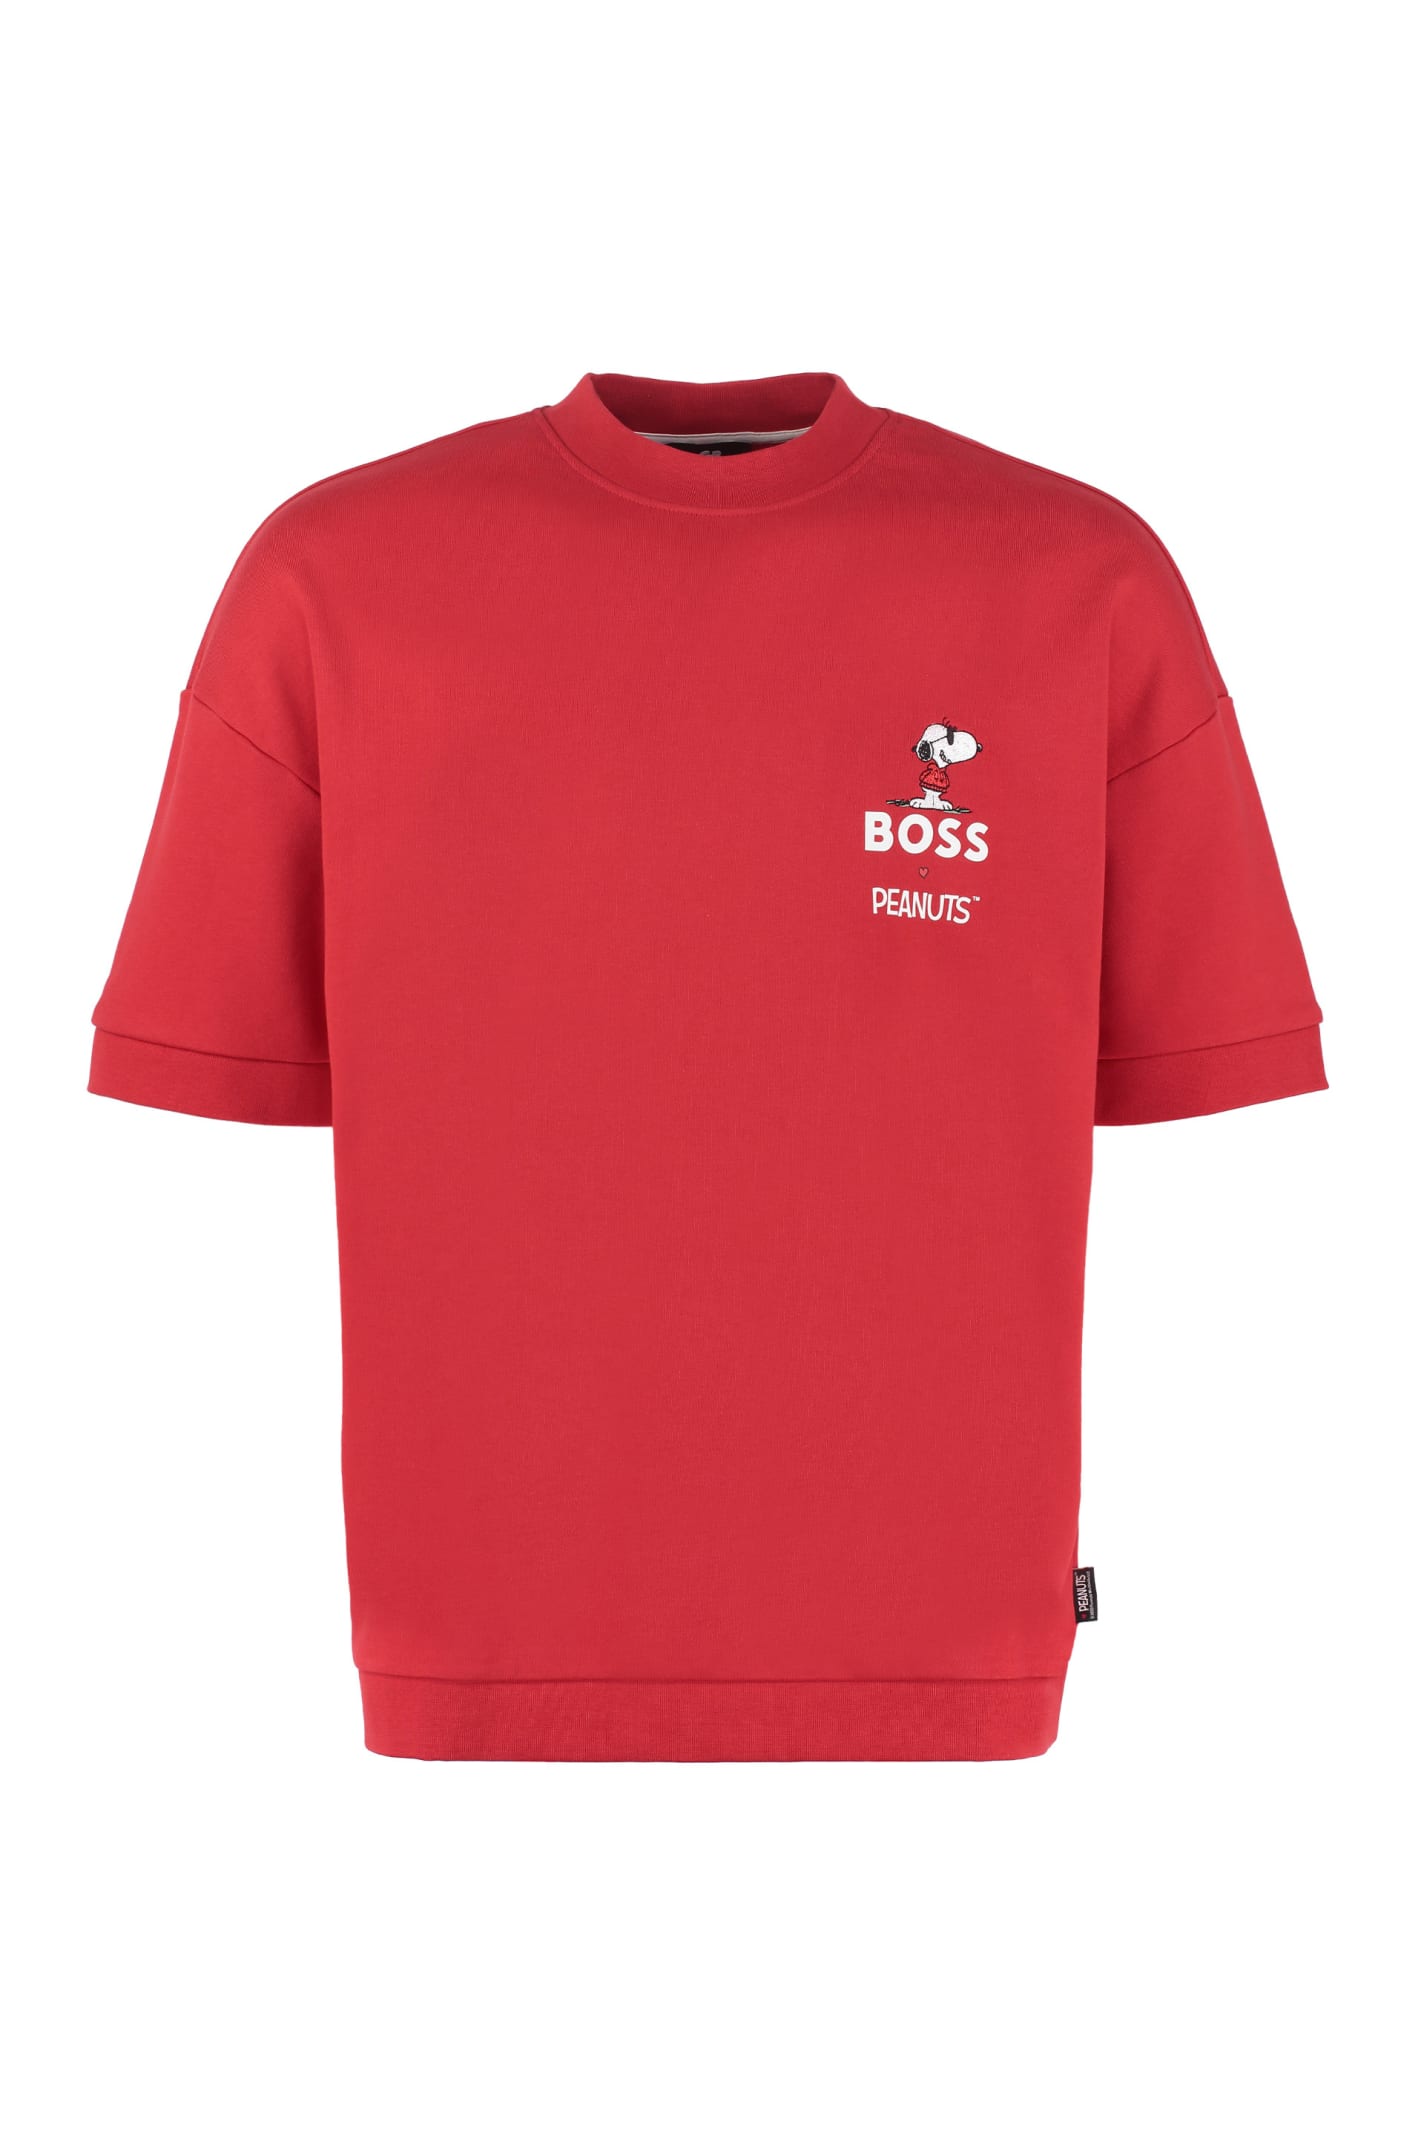 Hugo Boss Boss X Peanuts - Short Sleeved Sweatshirt